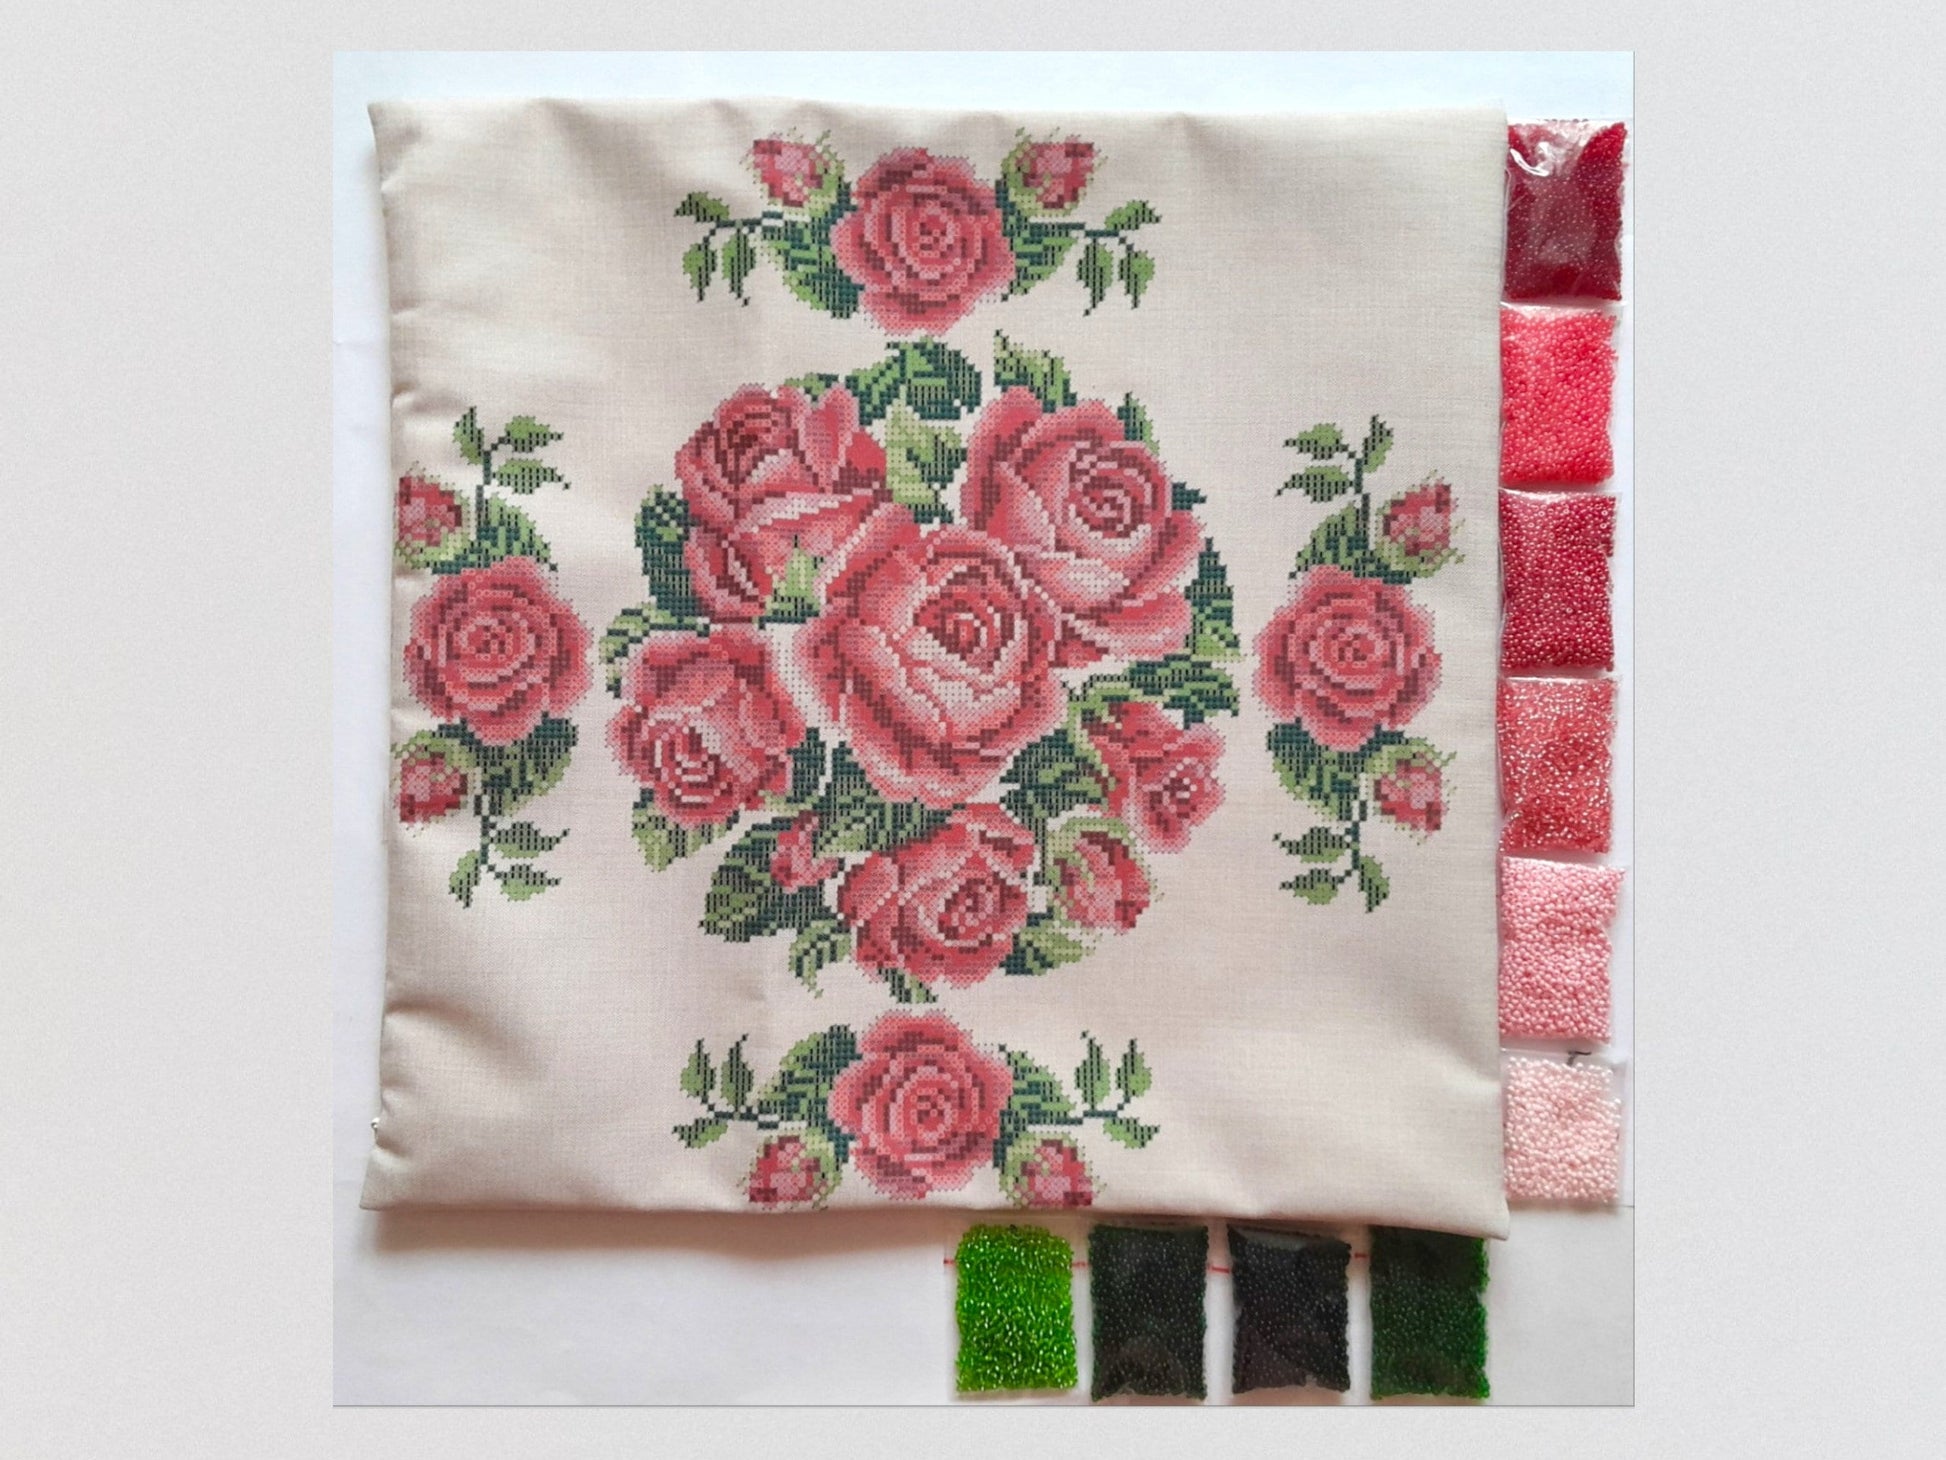 Handmade Pillow Bead Embroidery Kit: Unleash Your Creativity - VadymShop